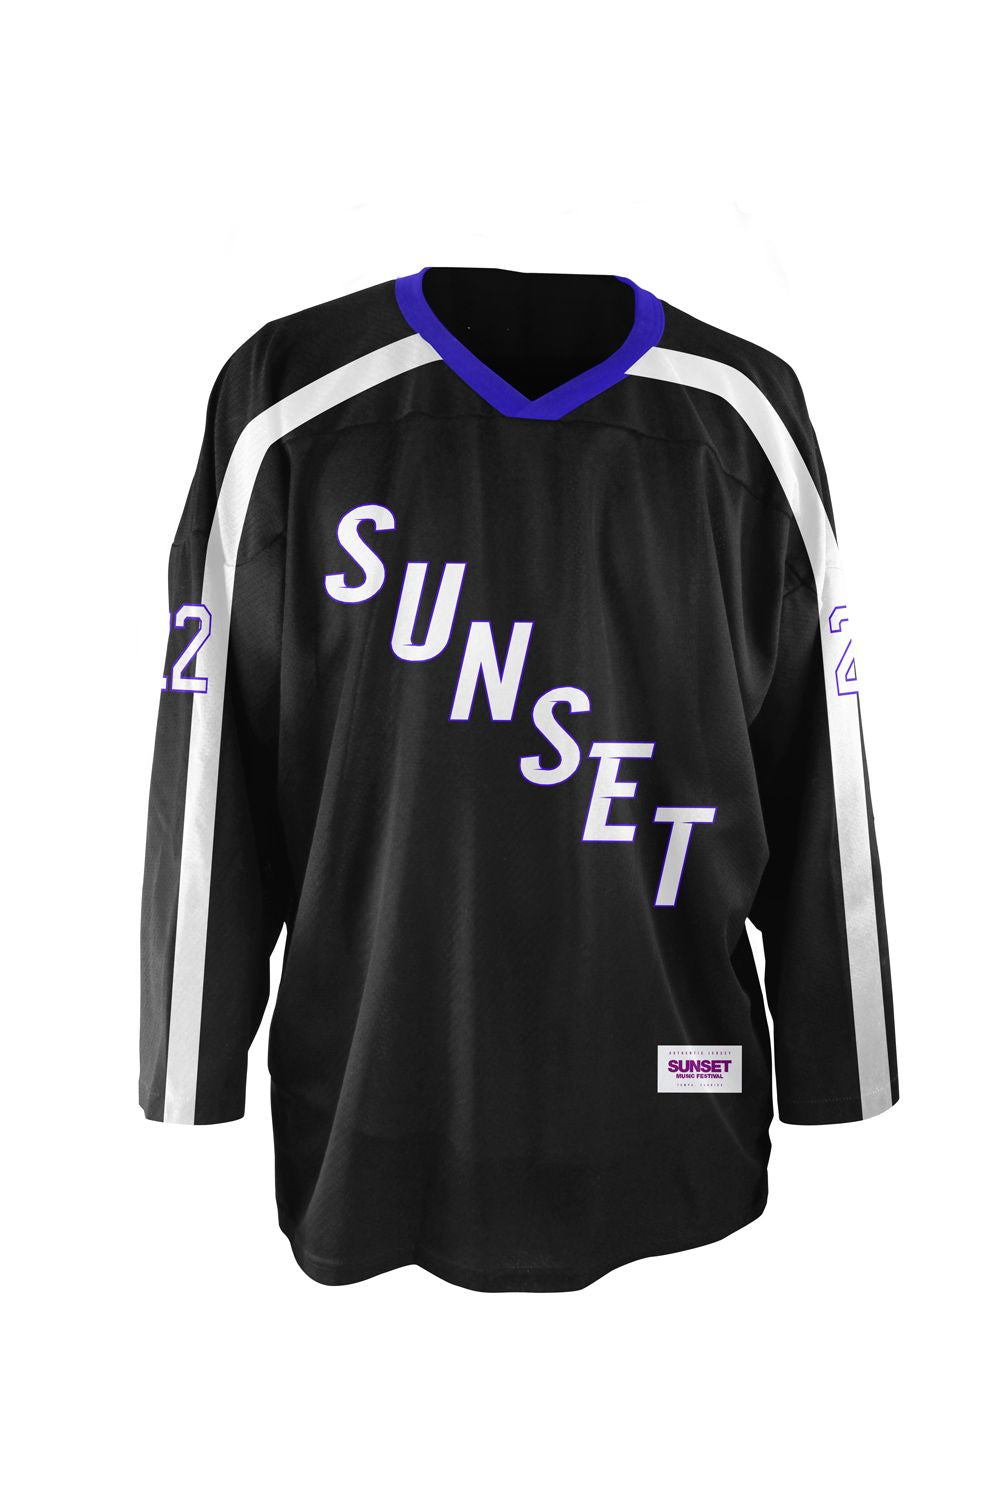 Sunset 2022 Hockey Jersey